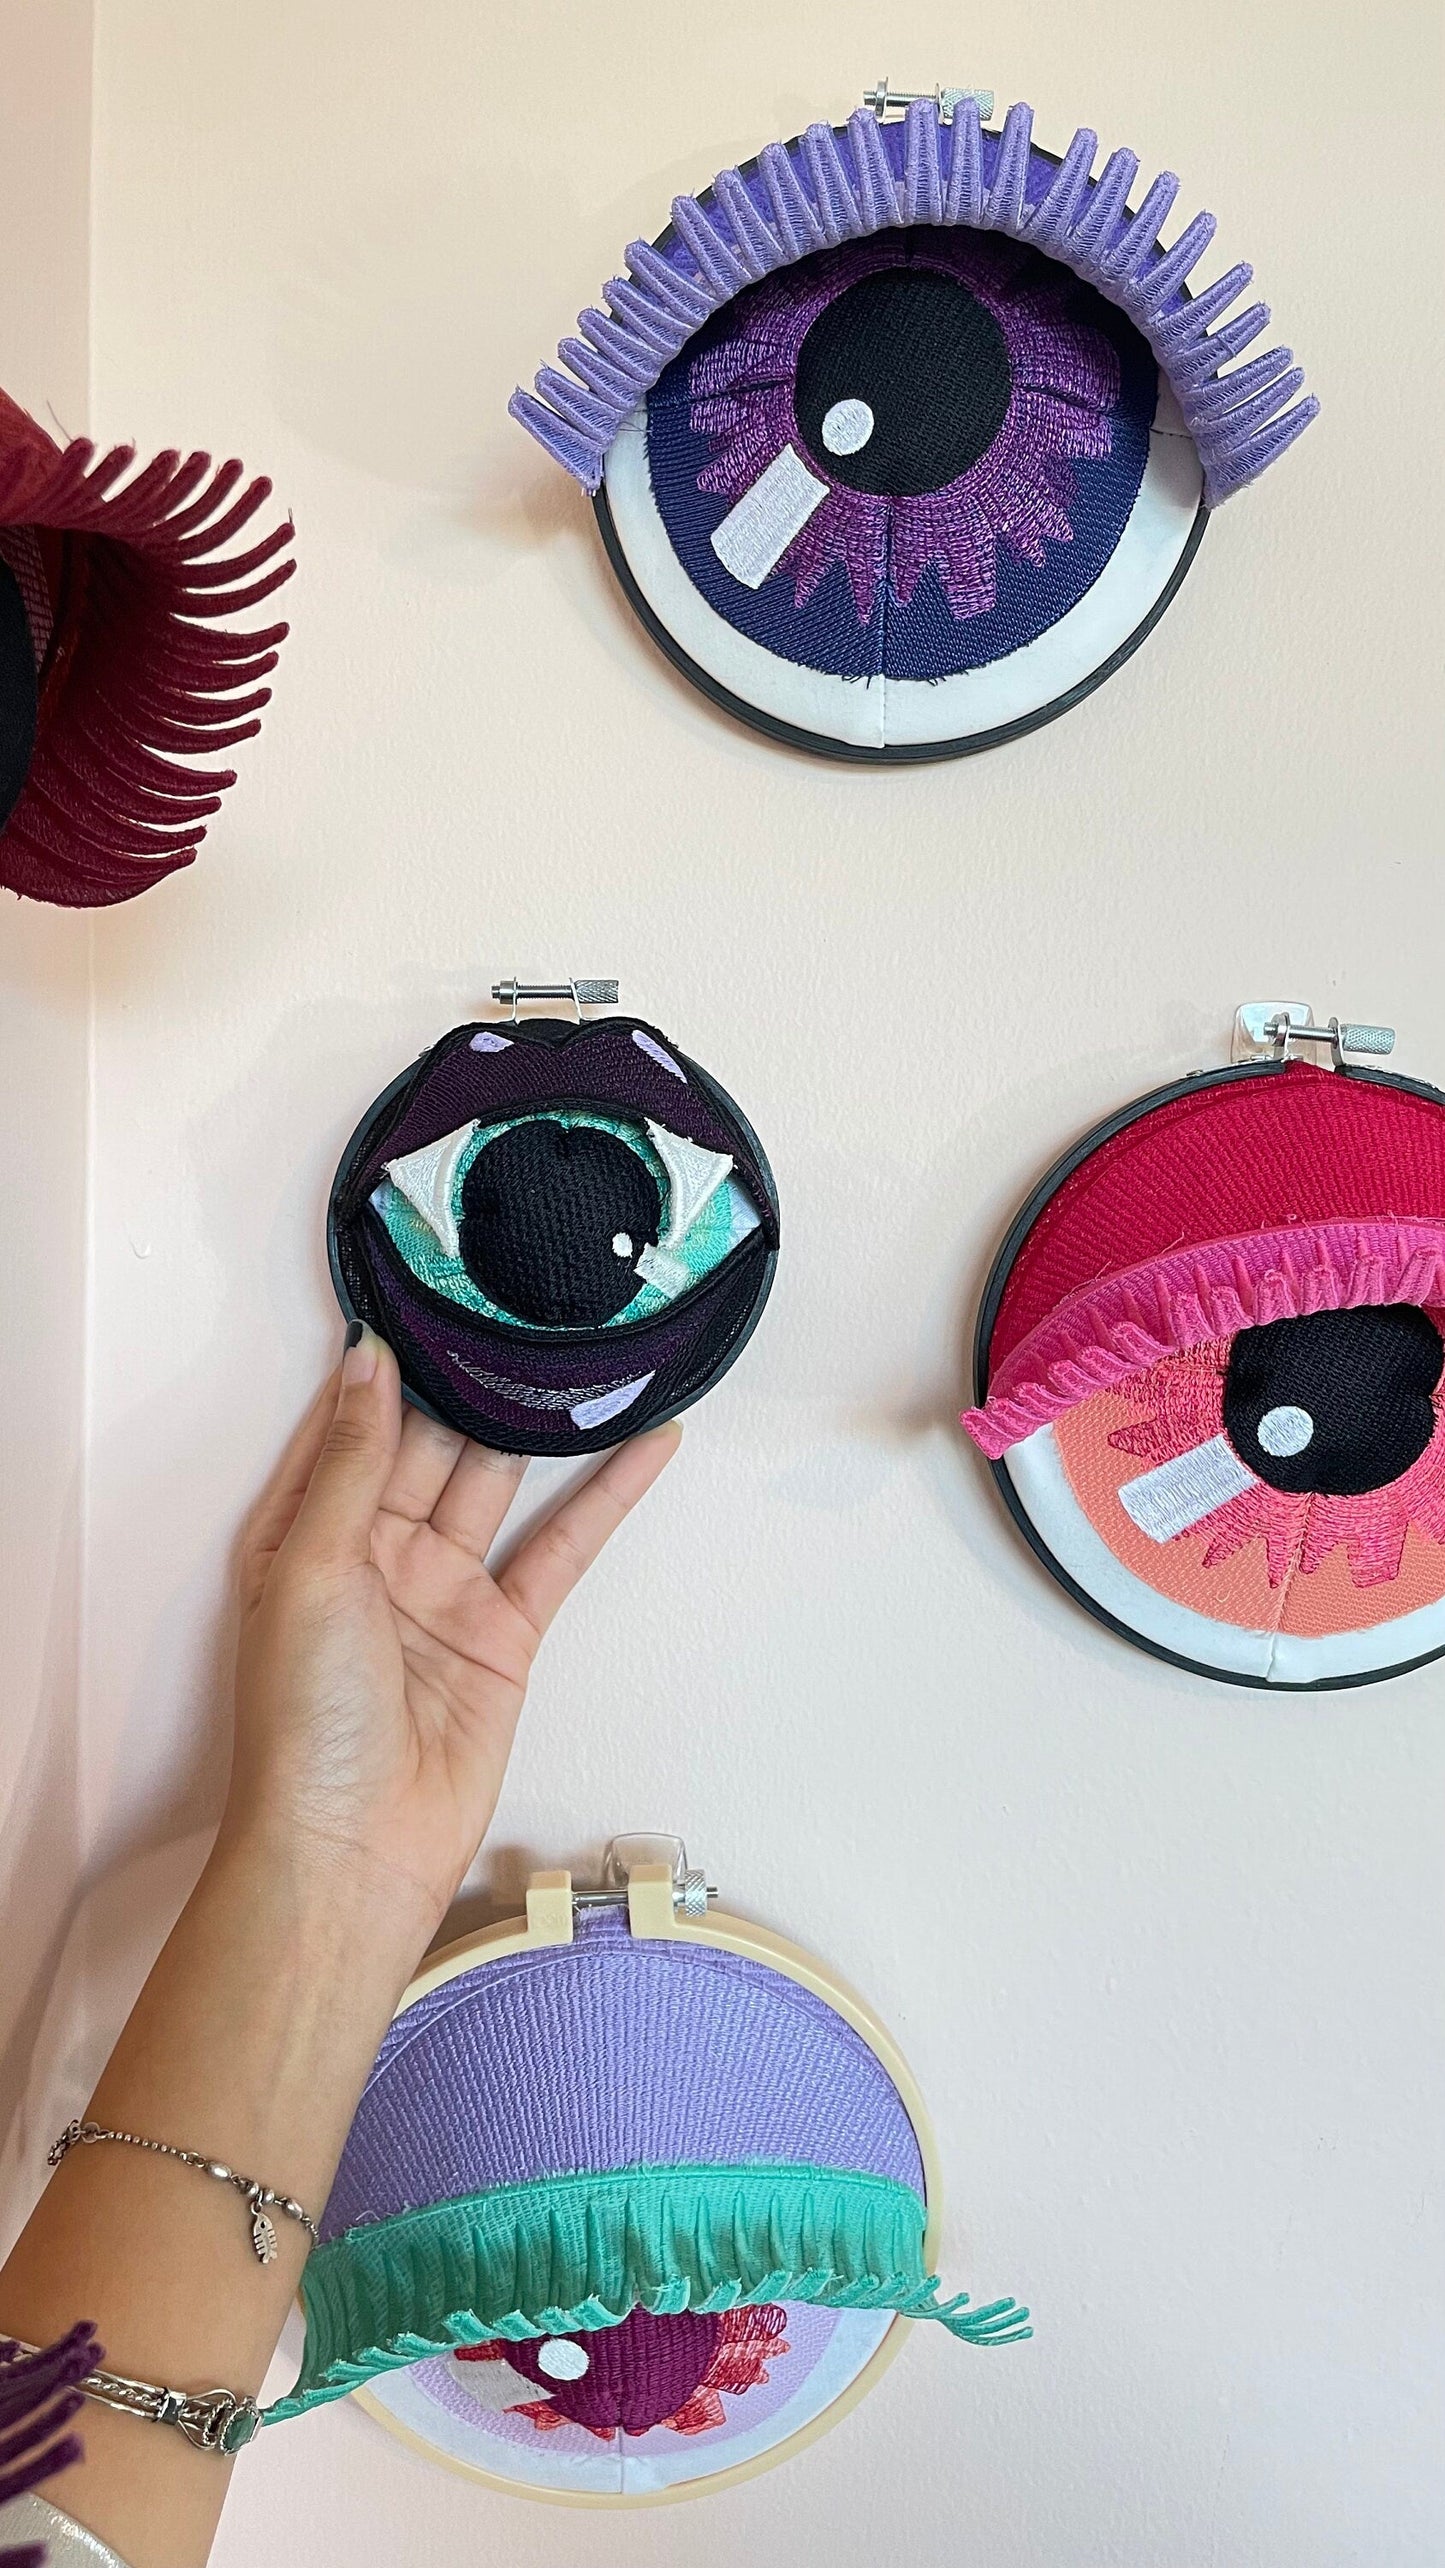 VLAD | Wall Hanging Fiber Art Lips with Eye & Fangs